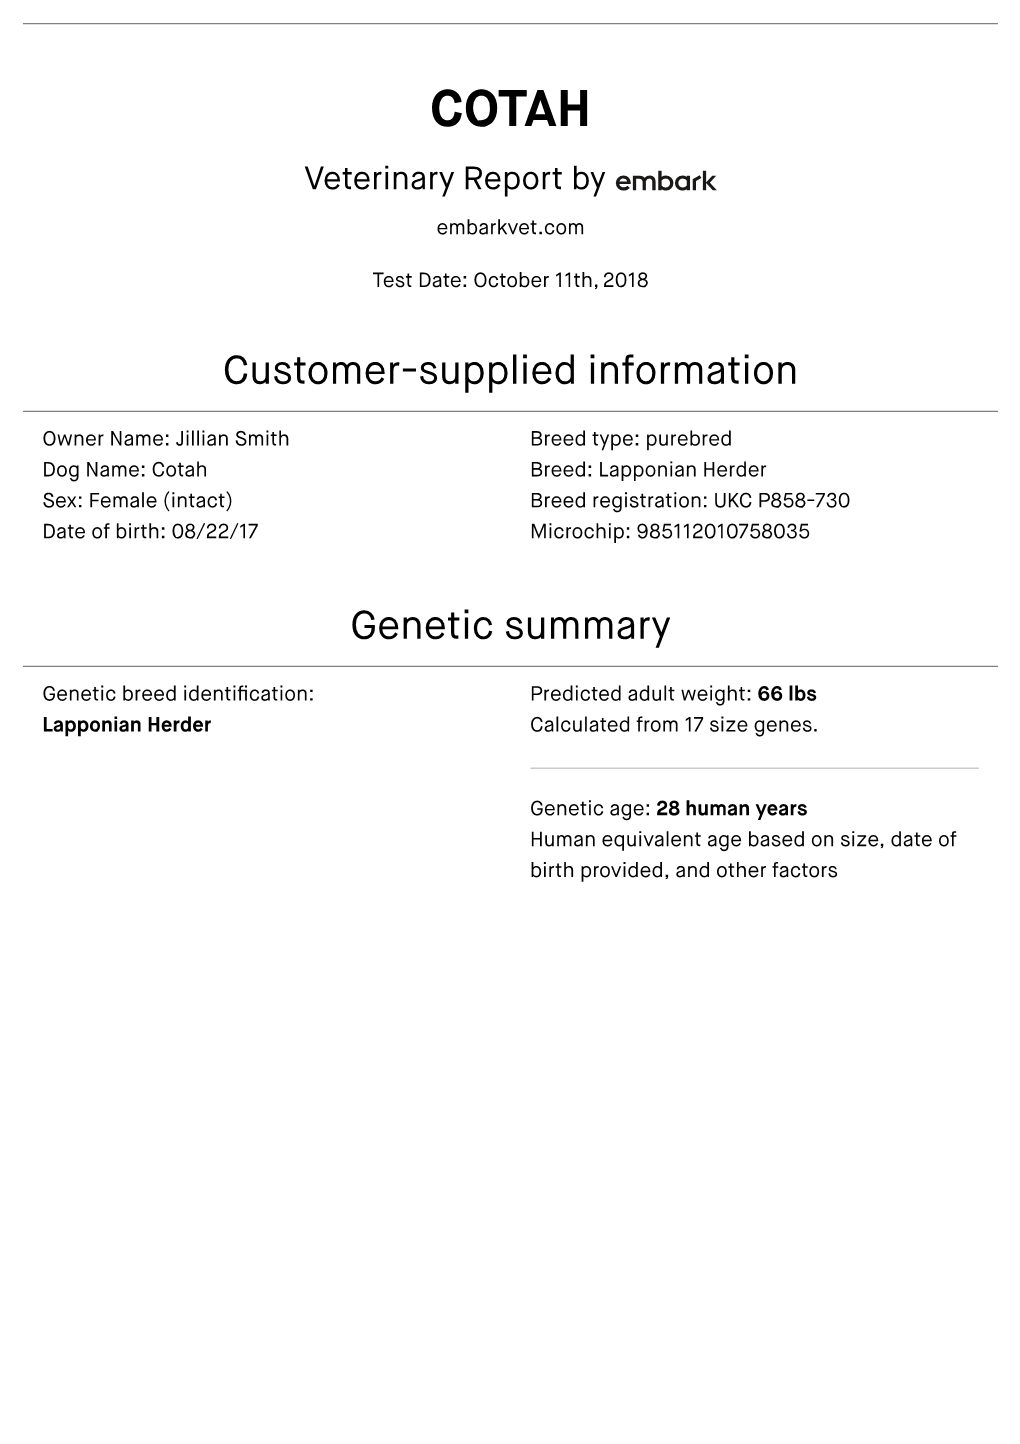 Customer-Supplied Information Genetic Summary